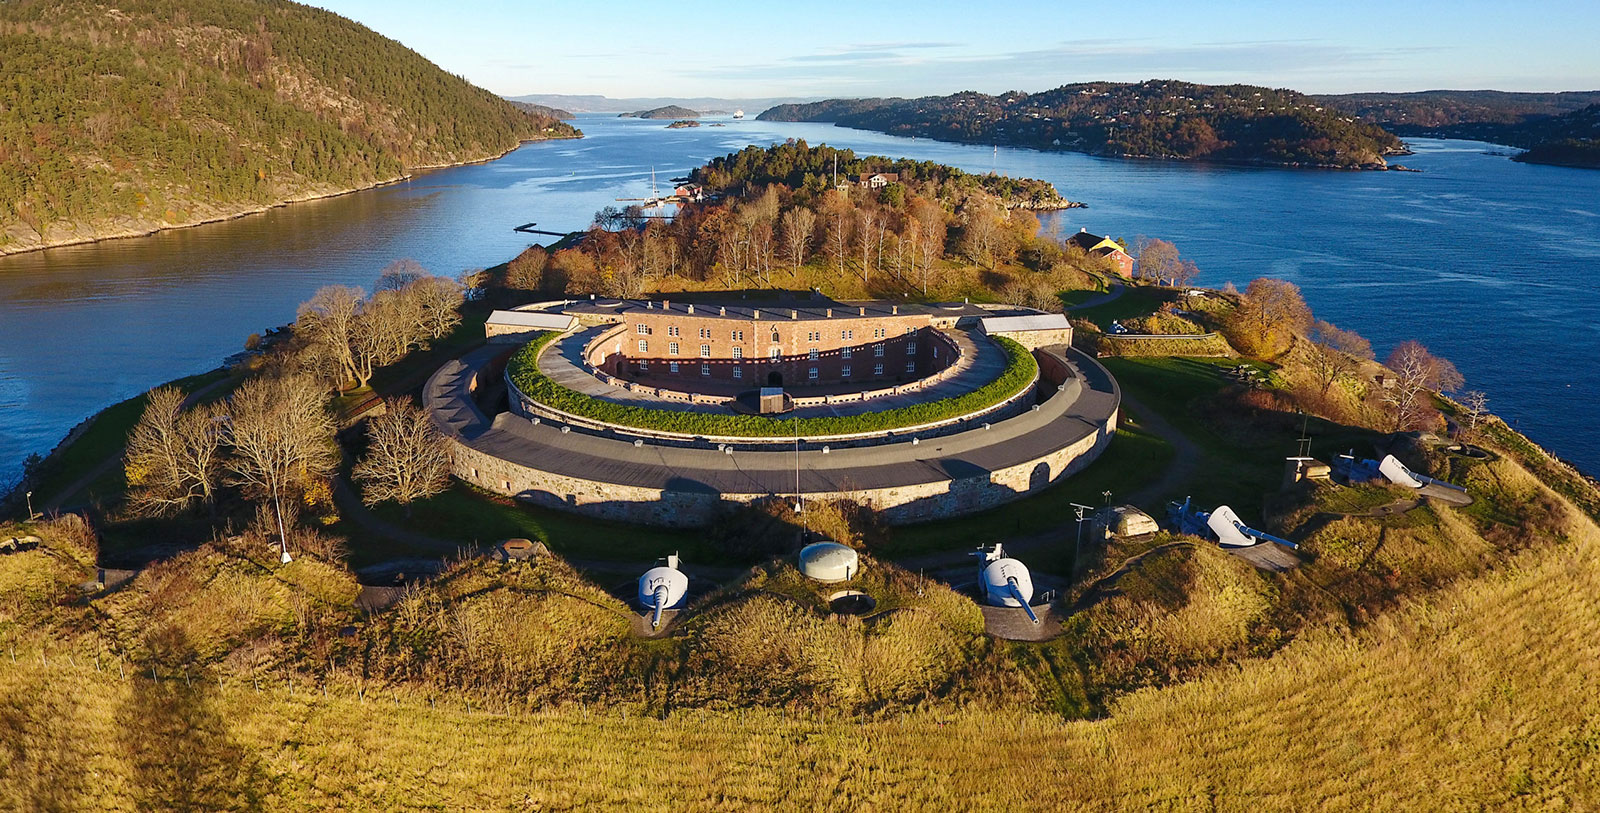 Explore the Akerhus Fortress (Akerhus Festning) along the shoreline of Oslo harbor.